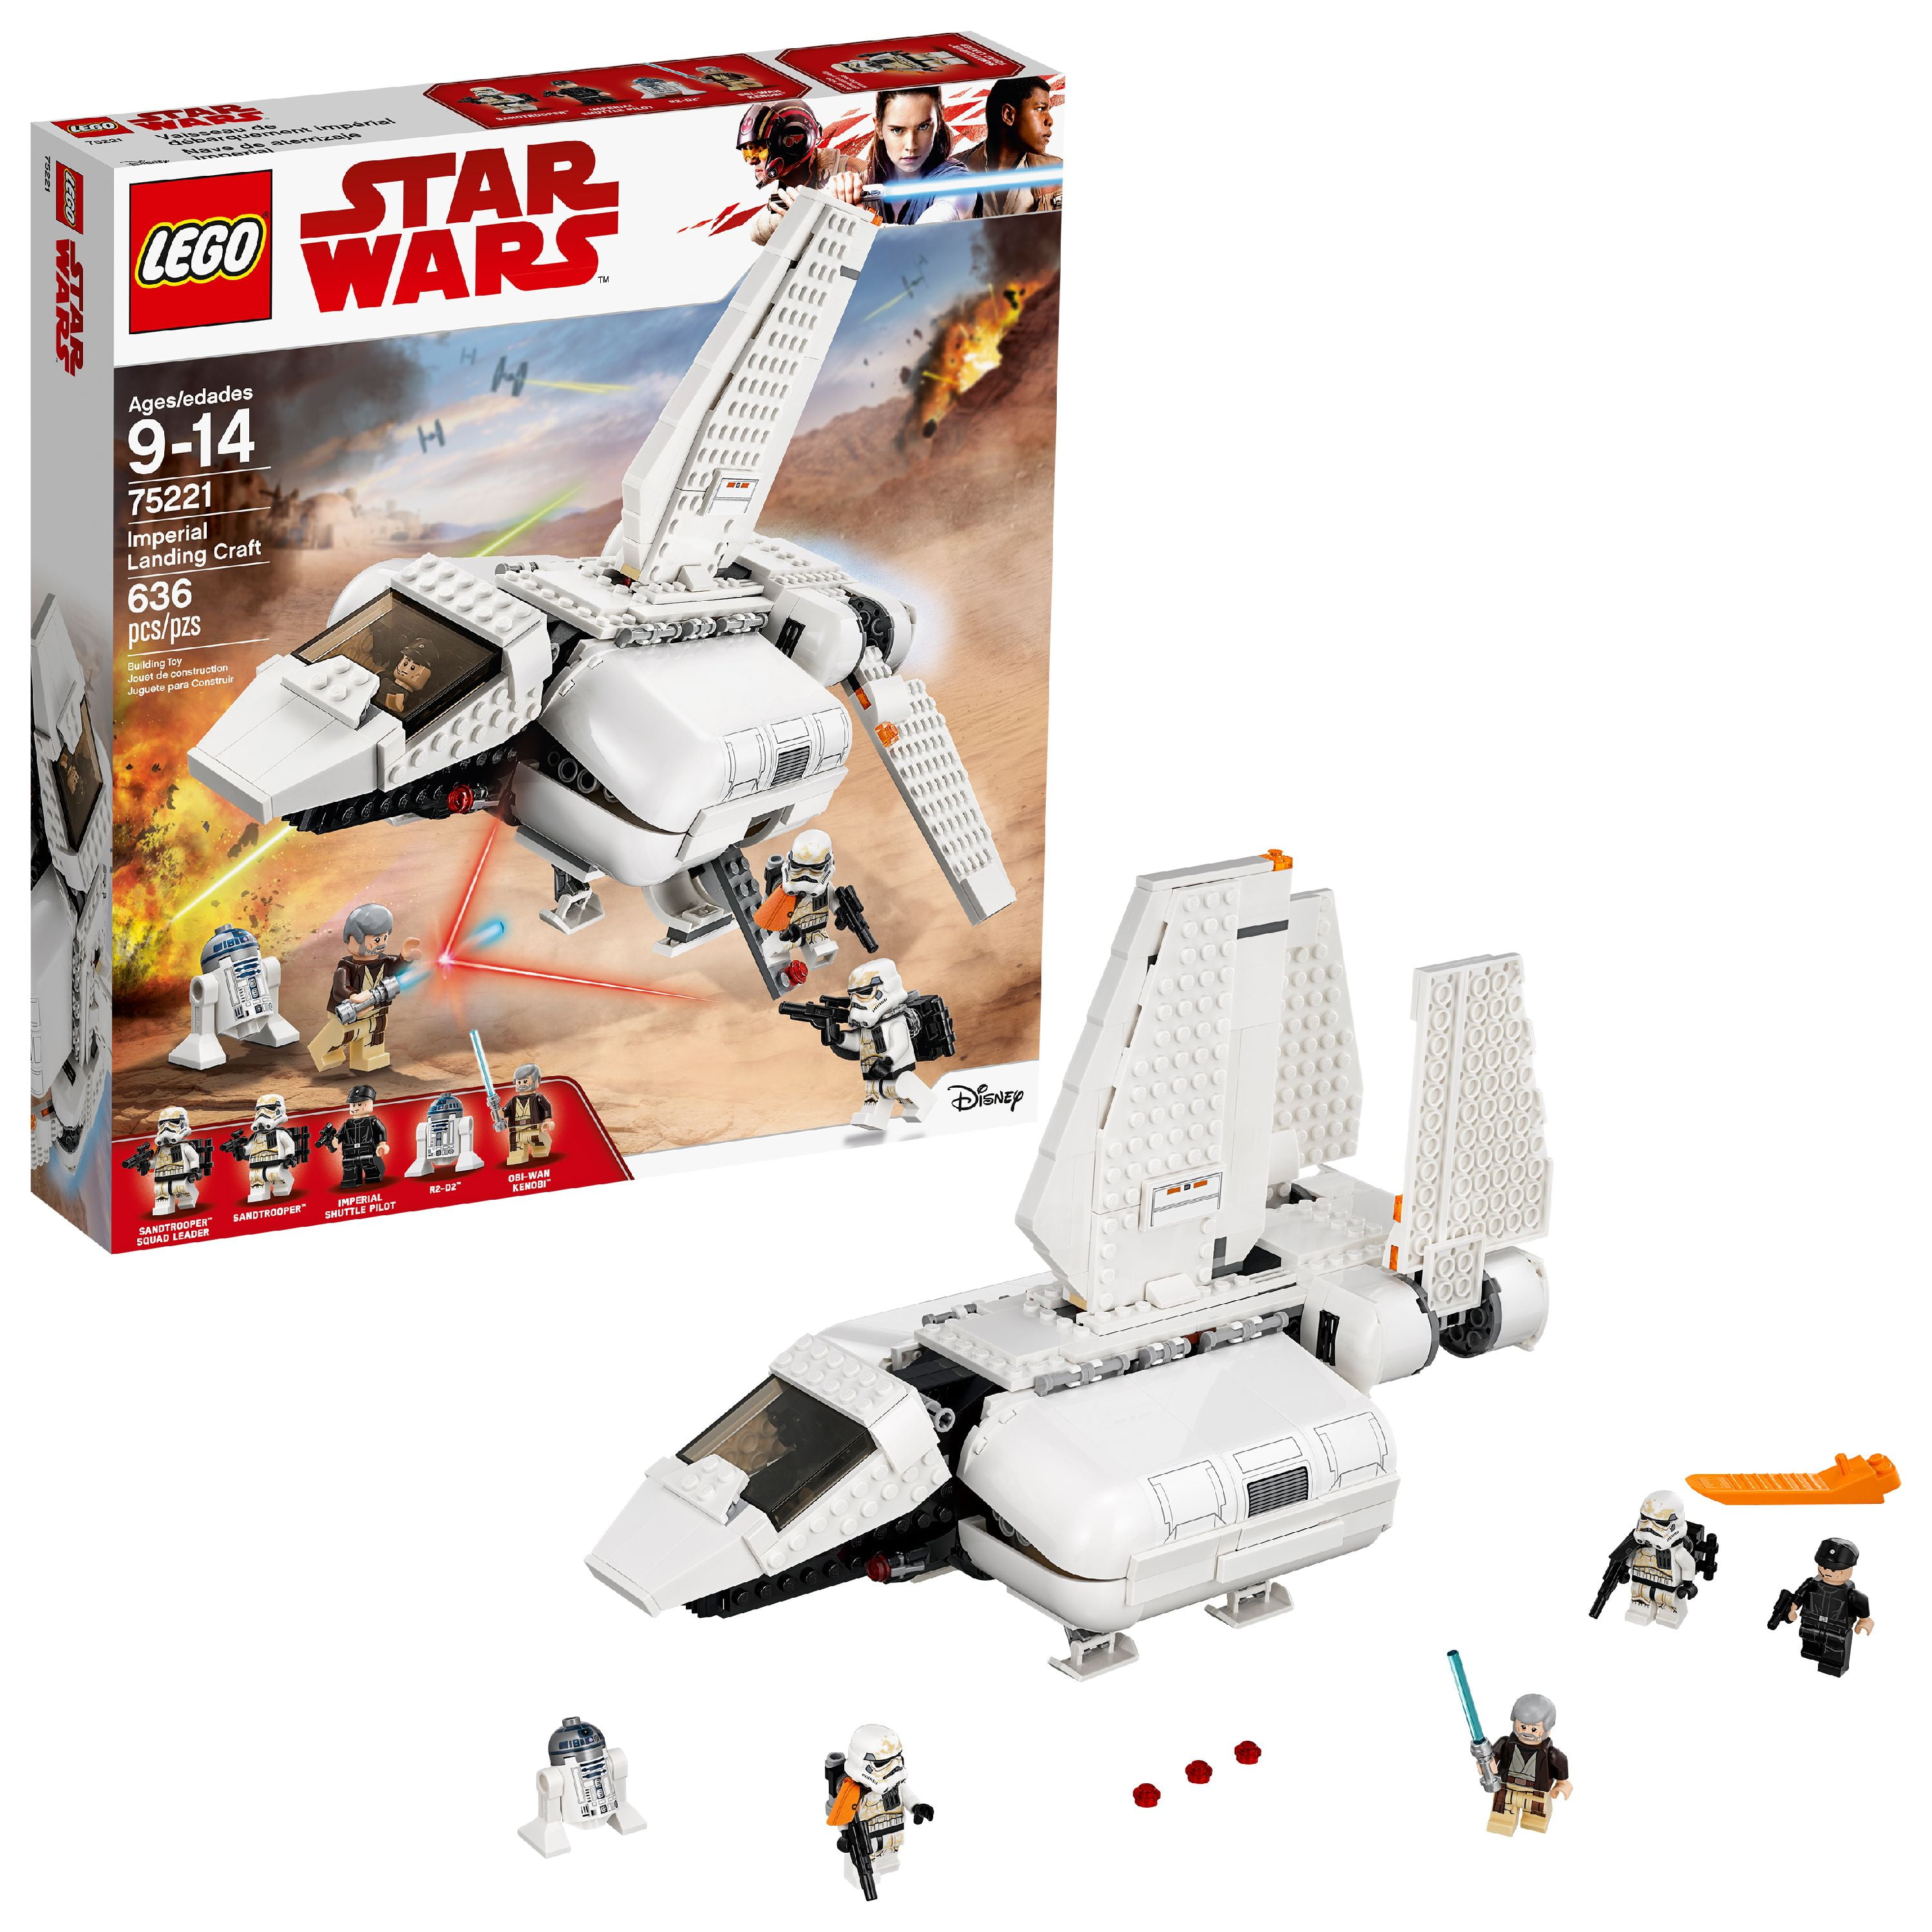 LEGO Star Wars Imperial Landing Craft - Walmart.com